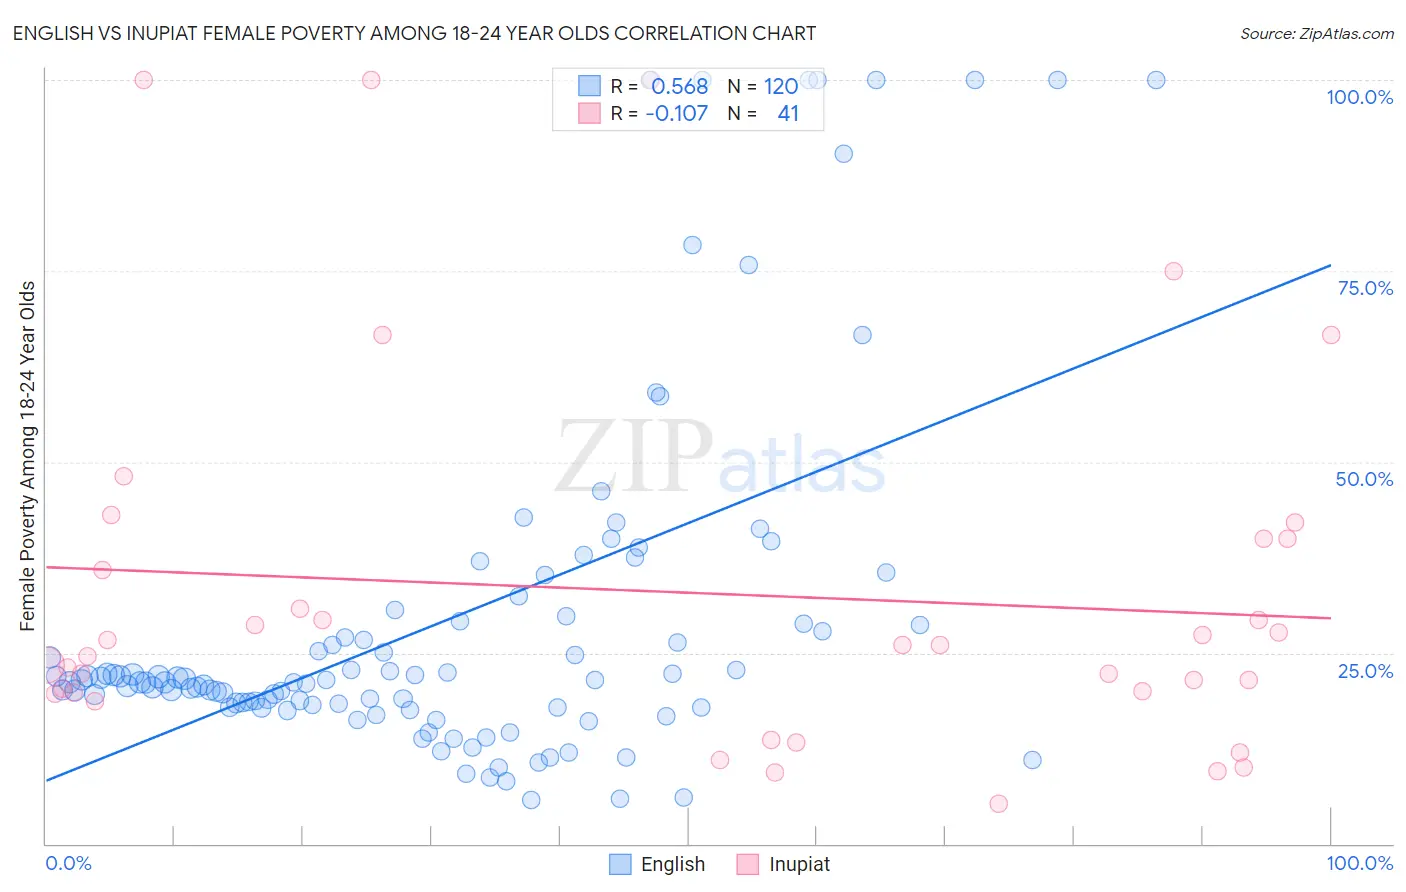 English vs Inupiat Female Poverty Among 18-24 Year Olds